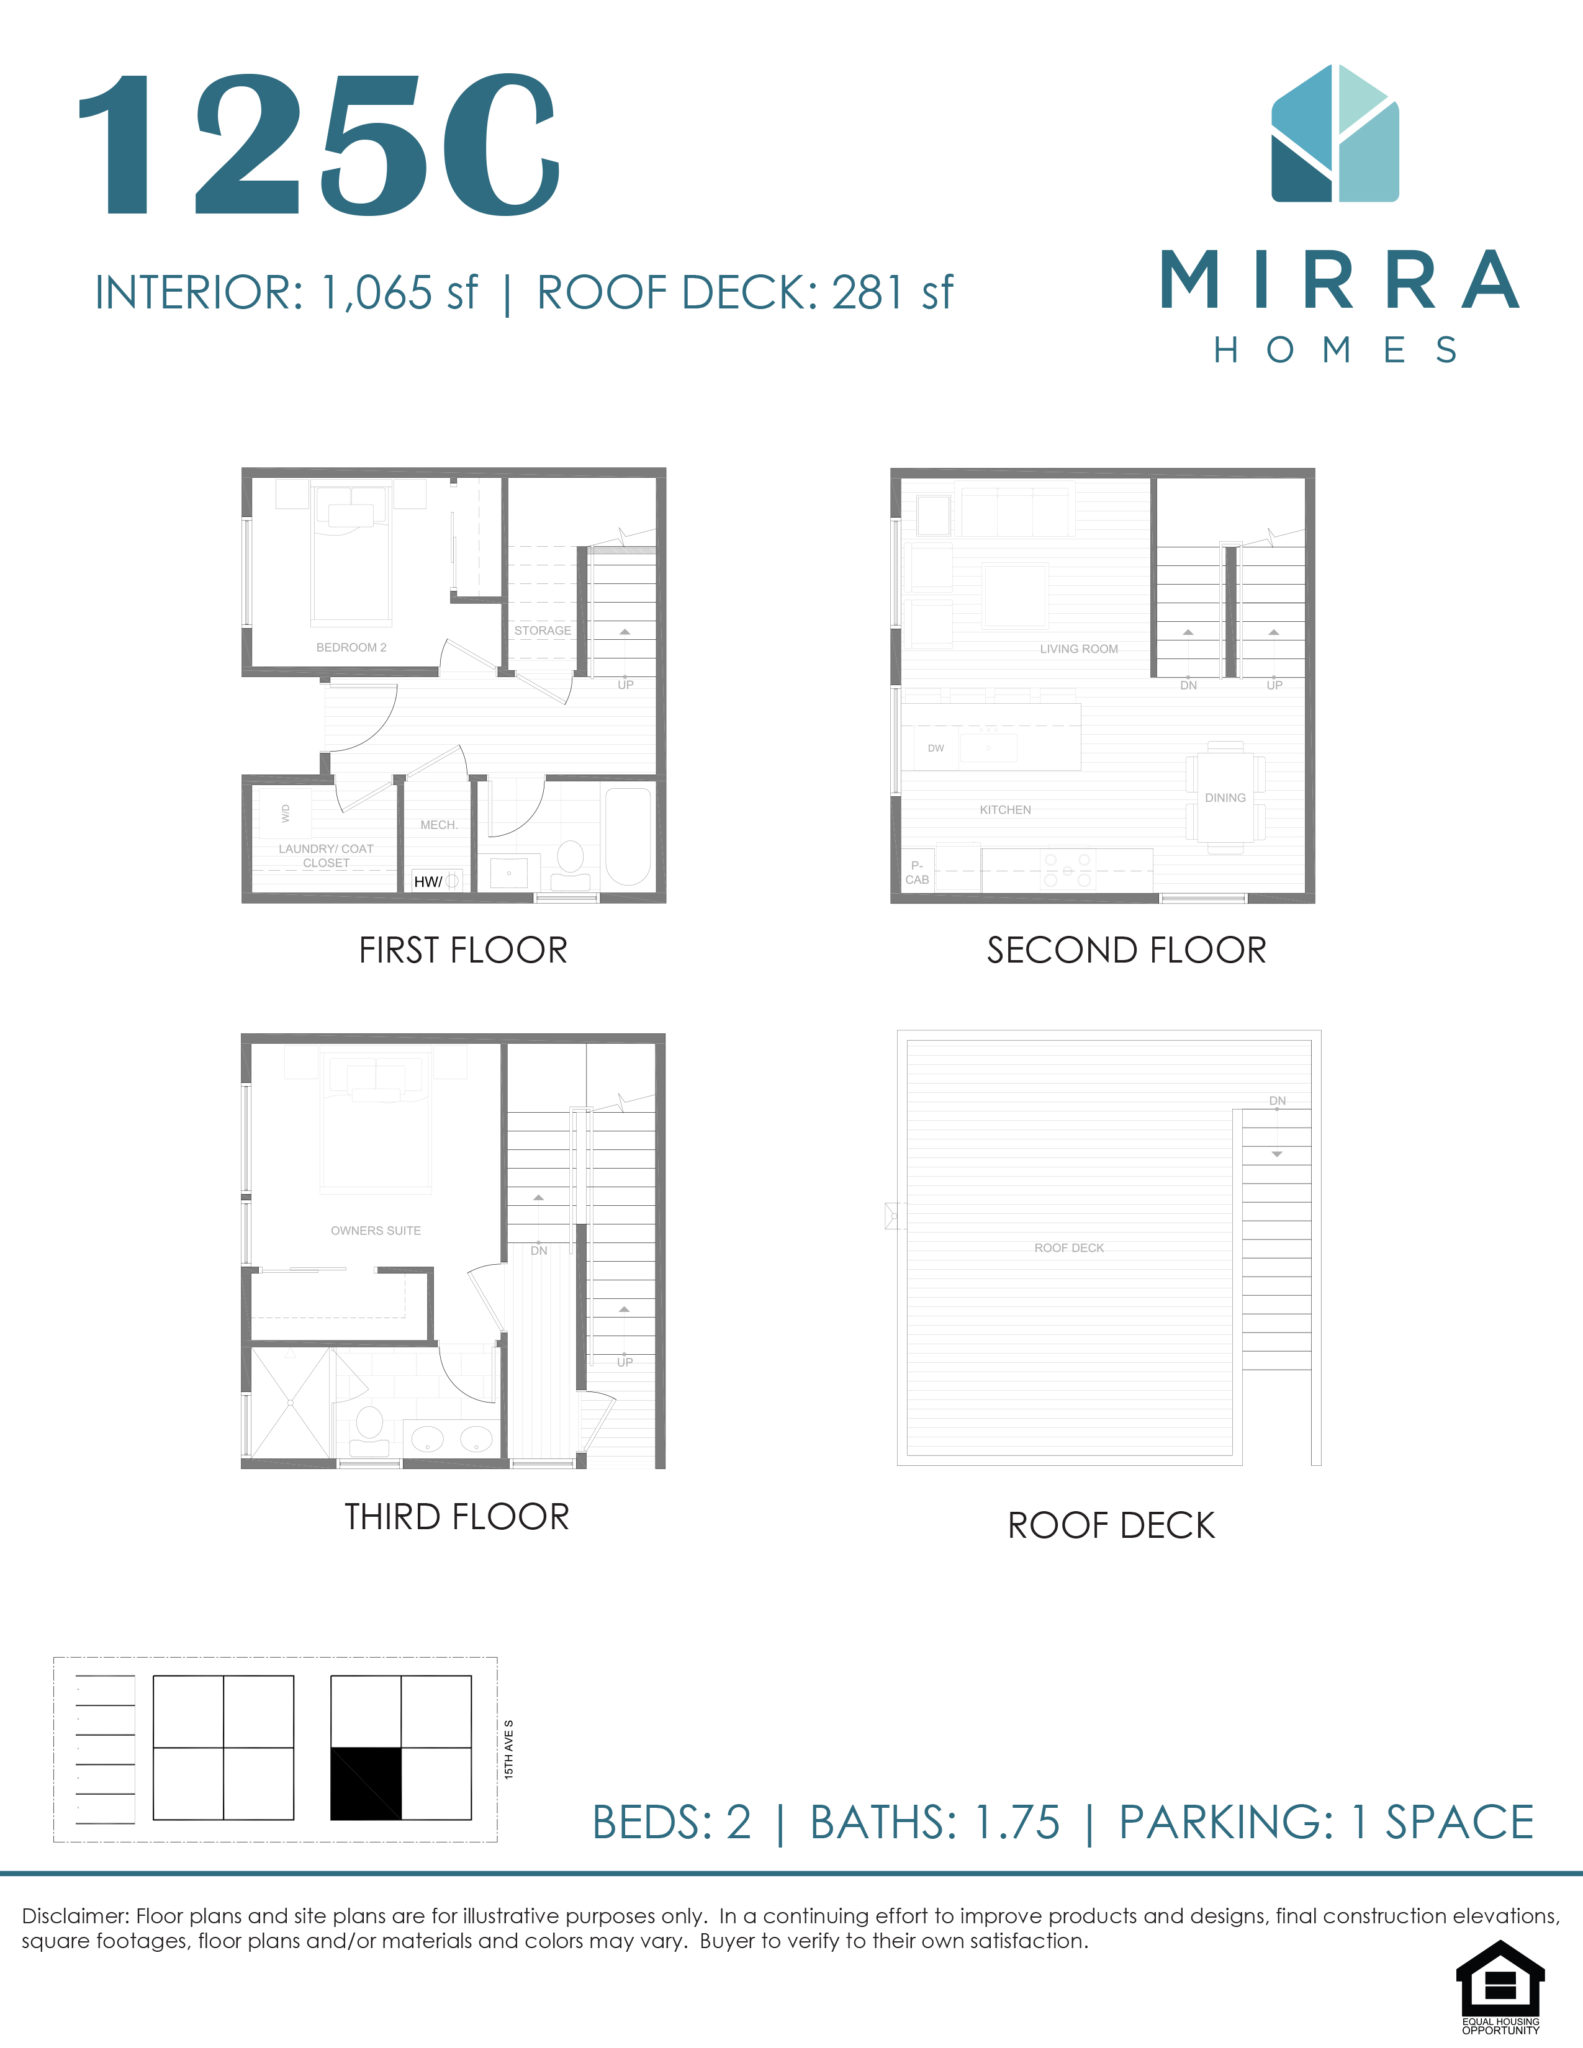 Mirra Homes, LLC